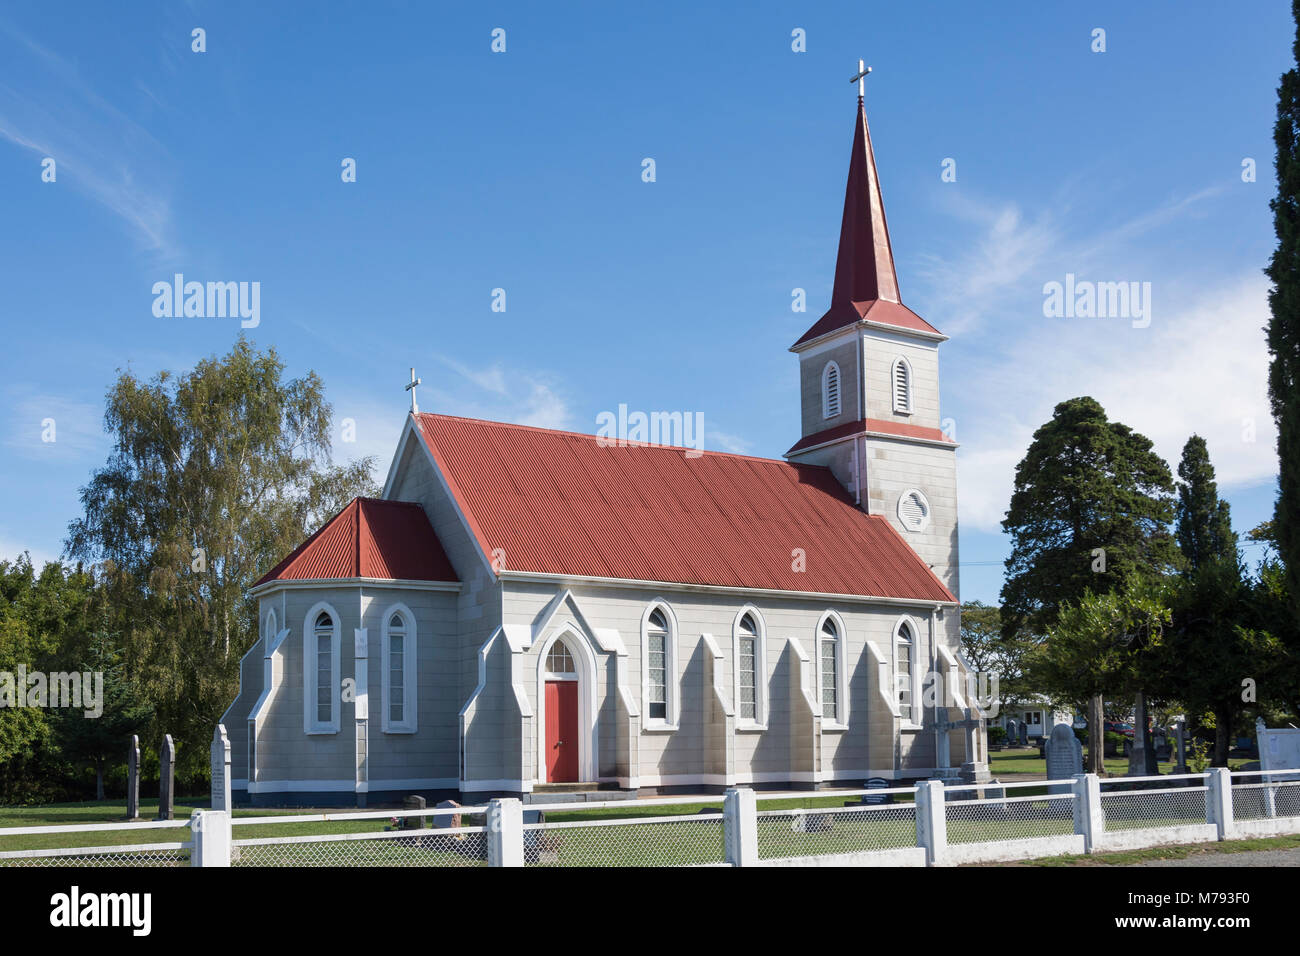 Historische St. Paul's Lutheran Church, Supplejack Valley Road, Upper Moutere, Tasman, Neuseeland Stockfoto